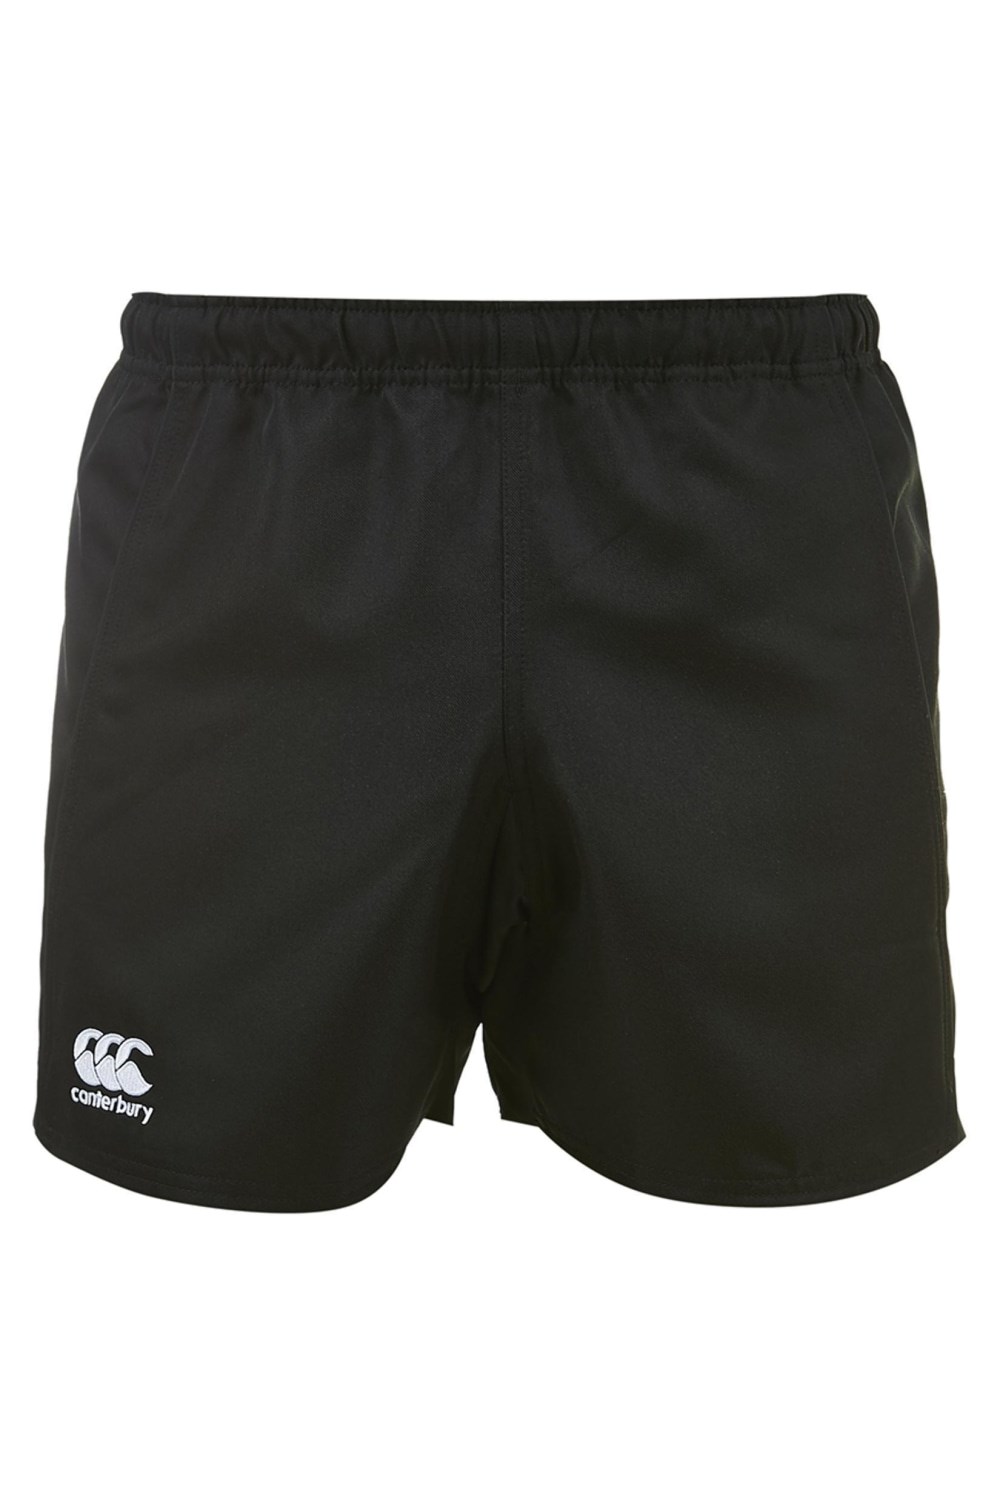 Mens Advantage Rugby Shorts -